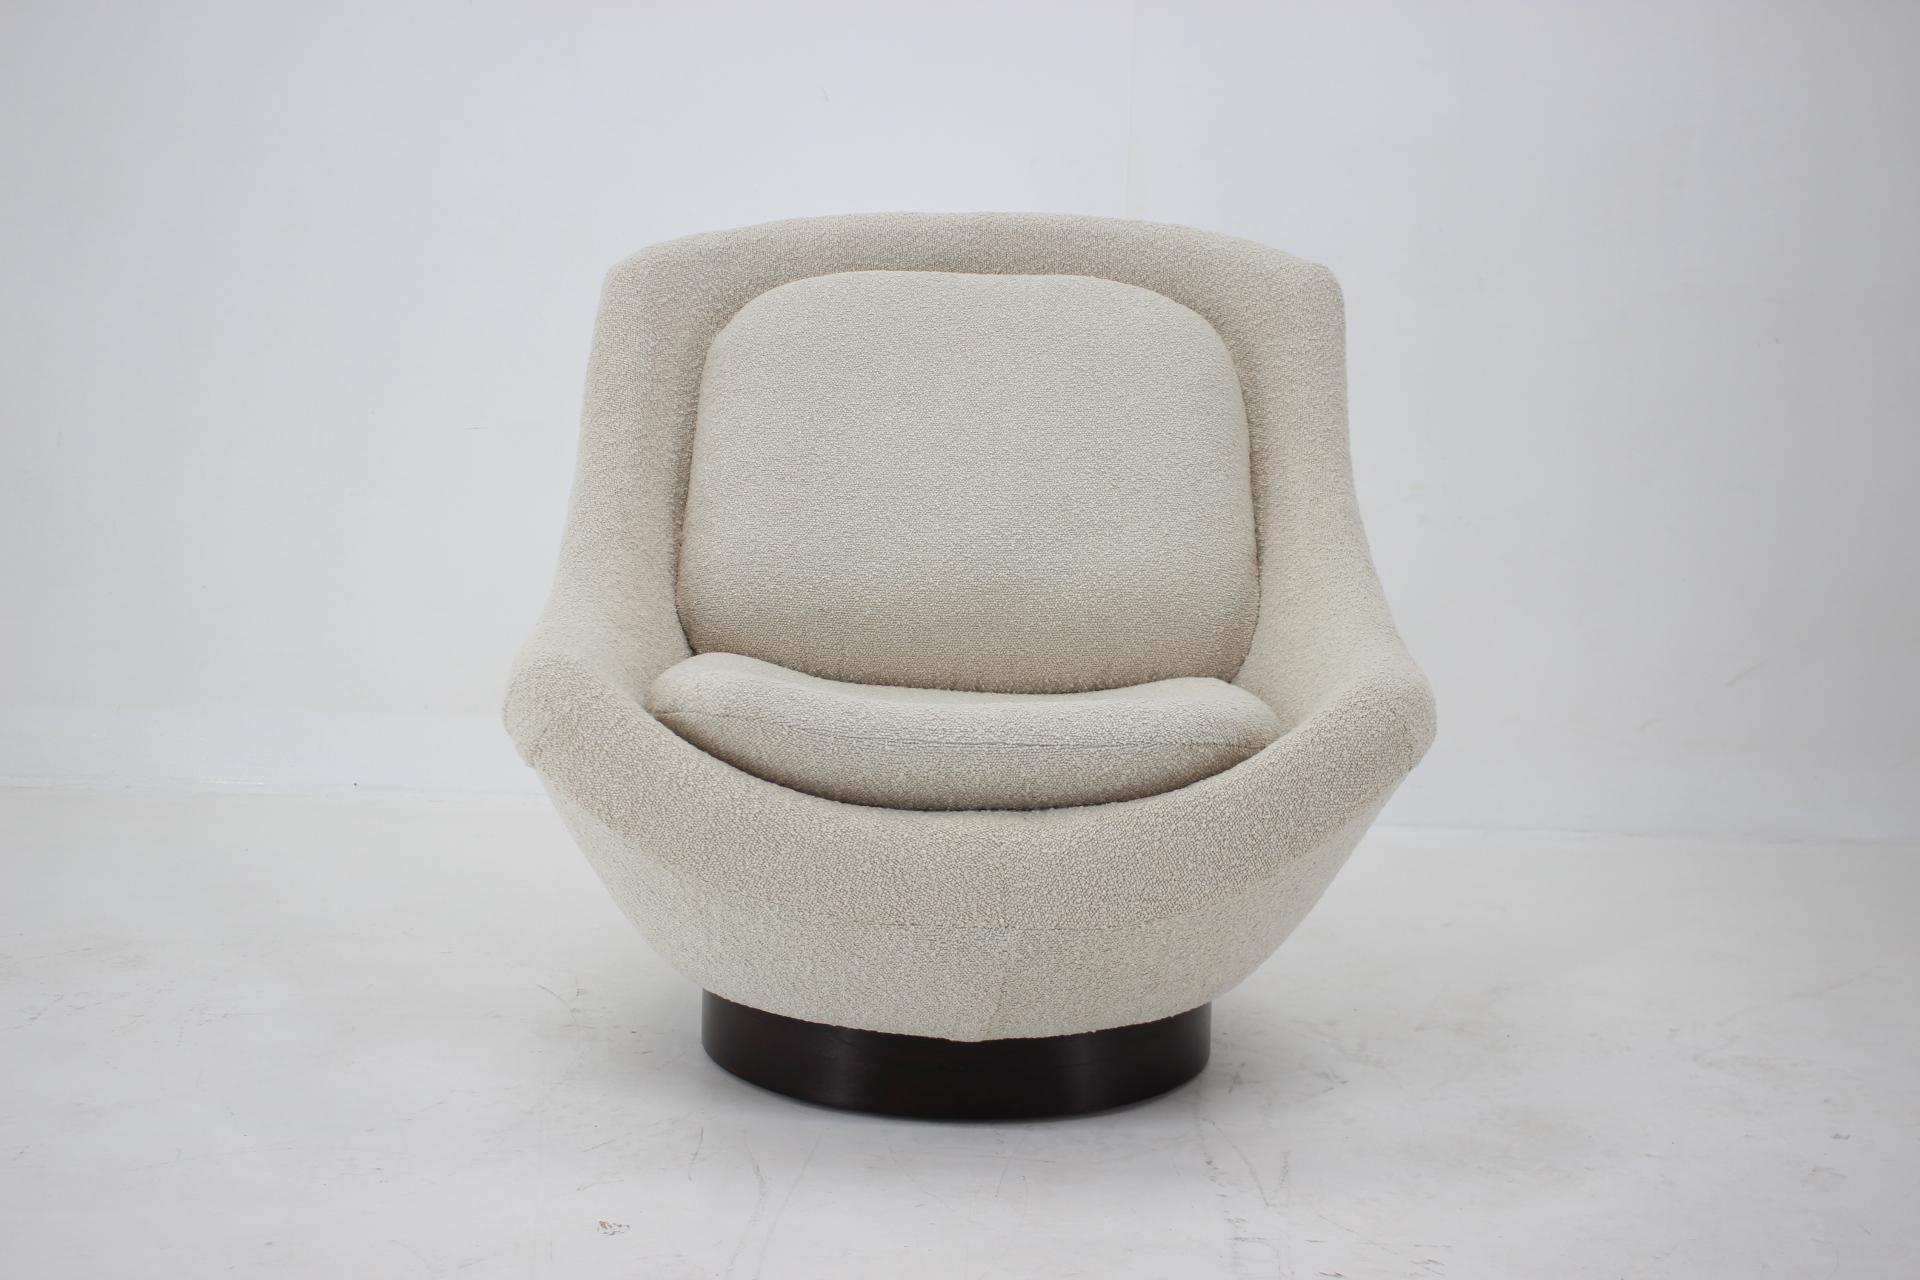 1970s lounge chair